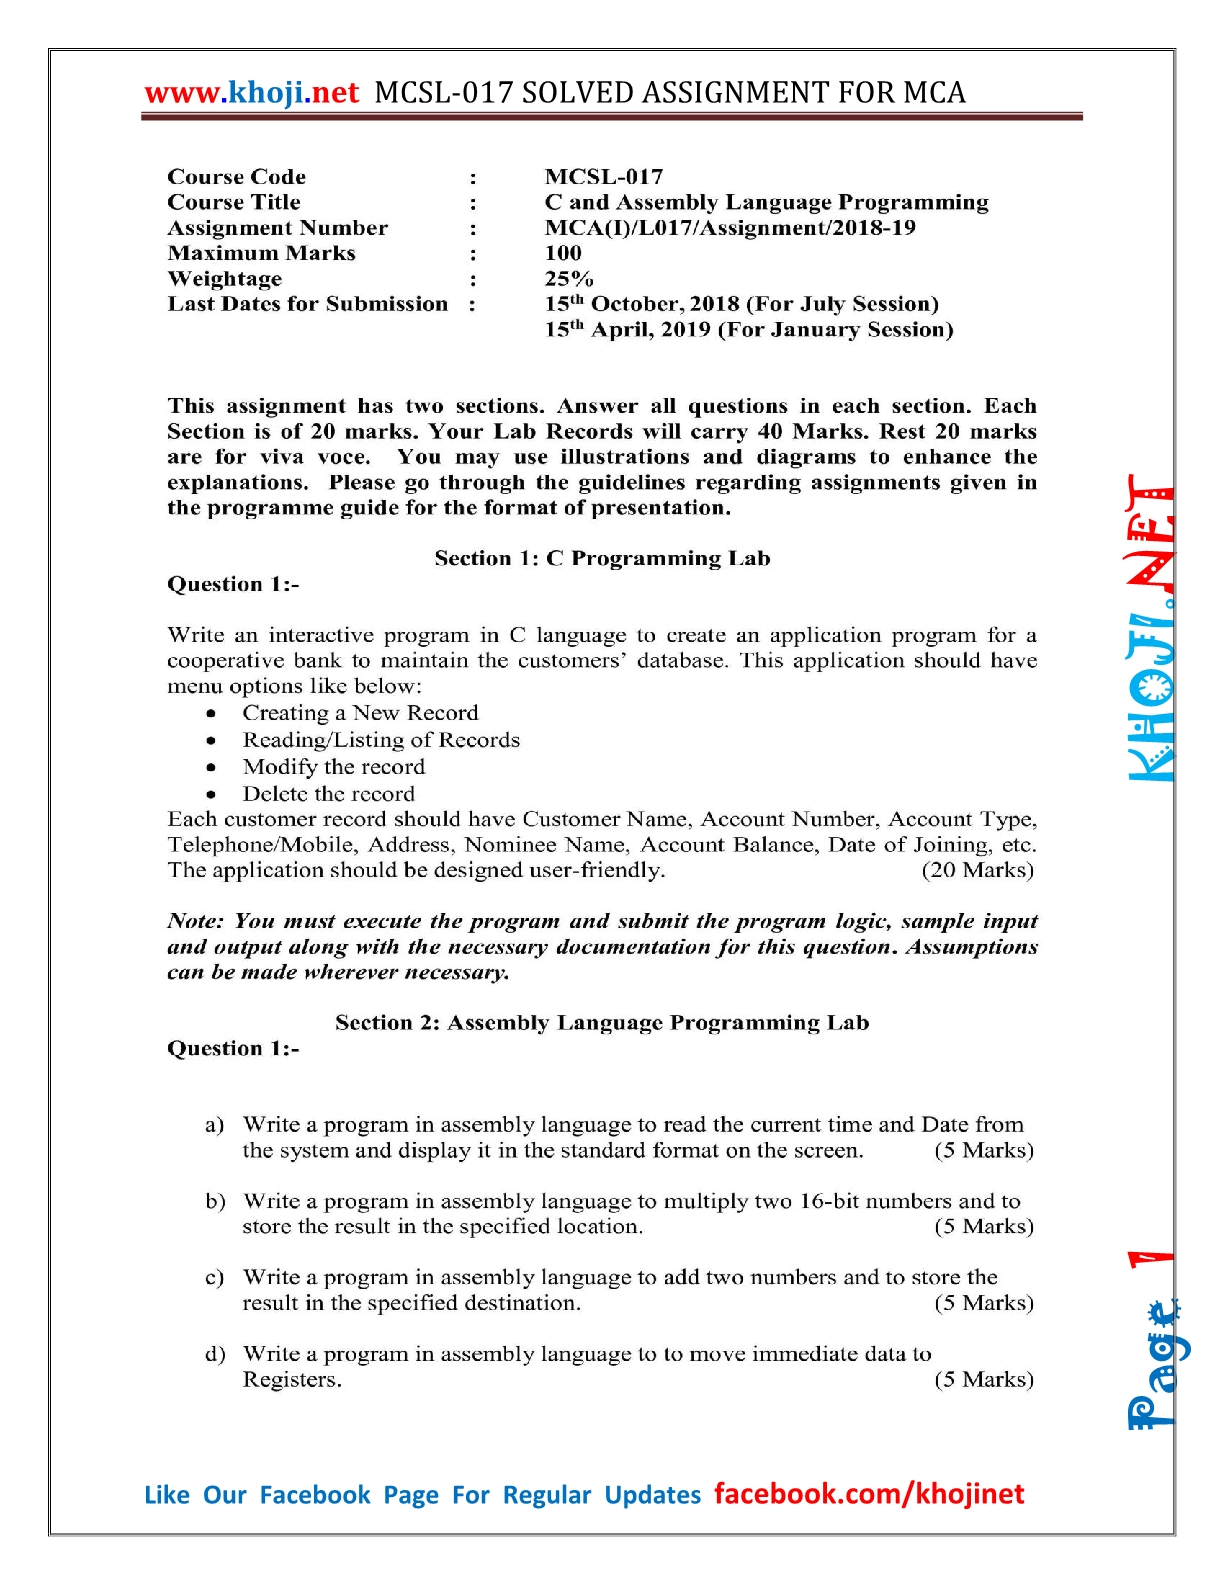 MCSL-017 Solved Assignment For IGNOU MCA 2018-19 PDF Solution